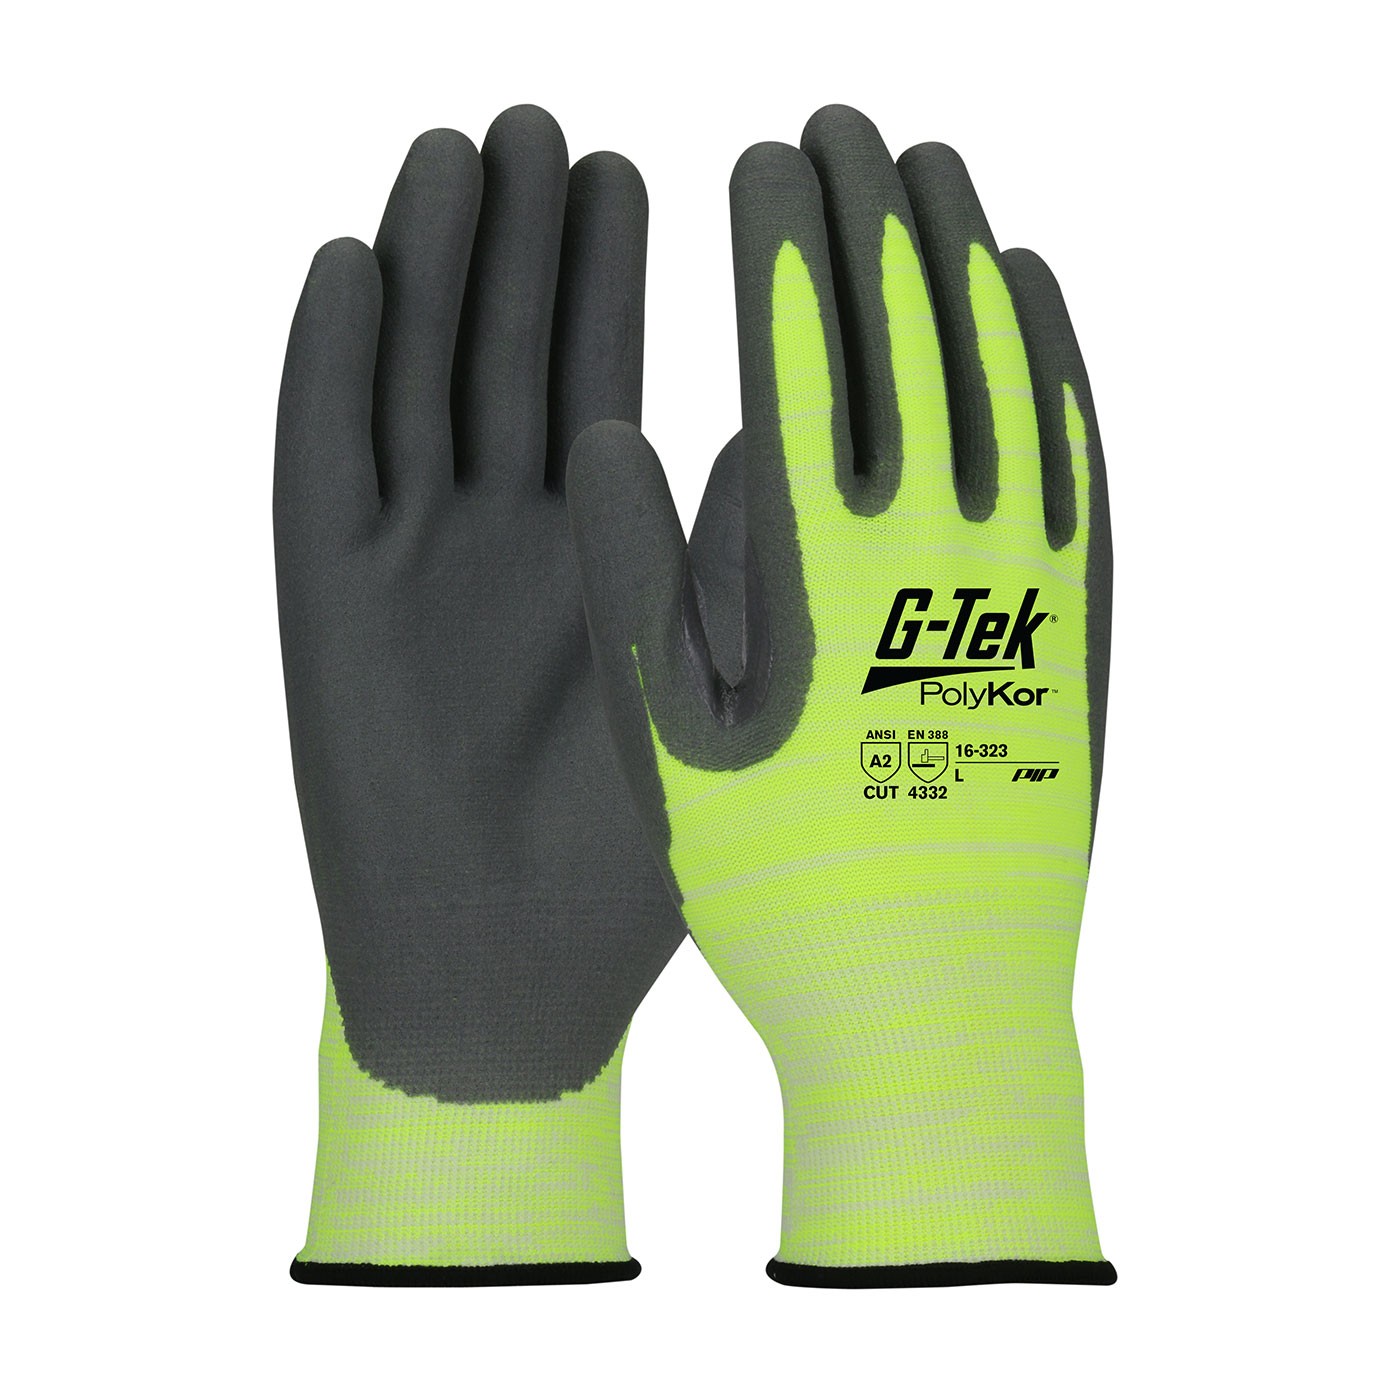 G-Tek® PolyKor® Hi-Vis Seamless Knit PolyKor® Blended Glove with Nitrile Coated Foam Grip on Palm & Fingers  (#16-323)